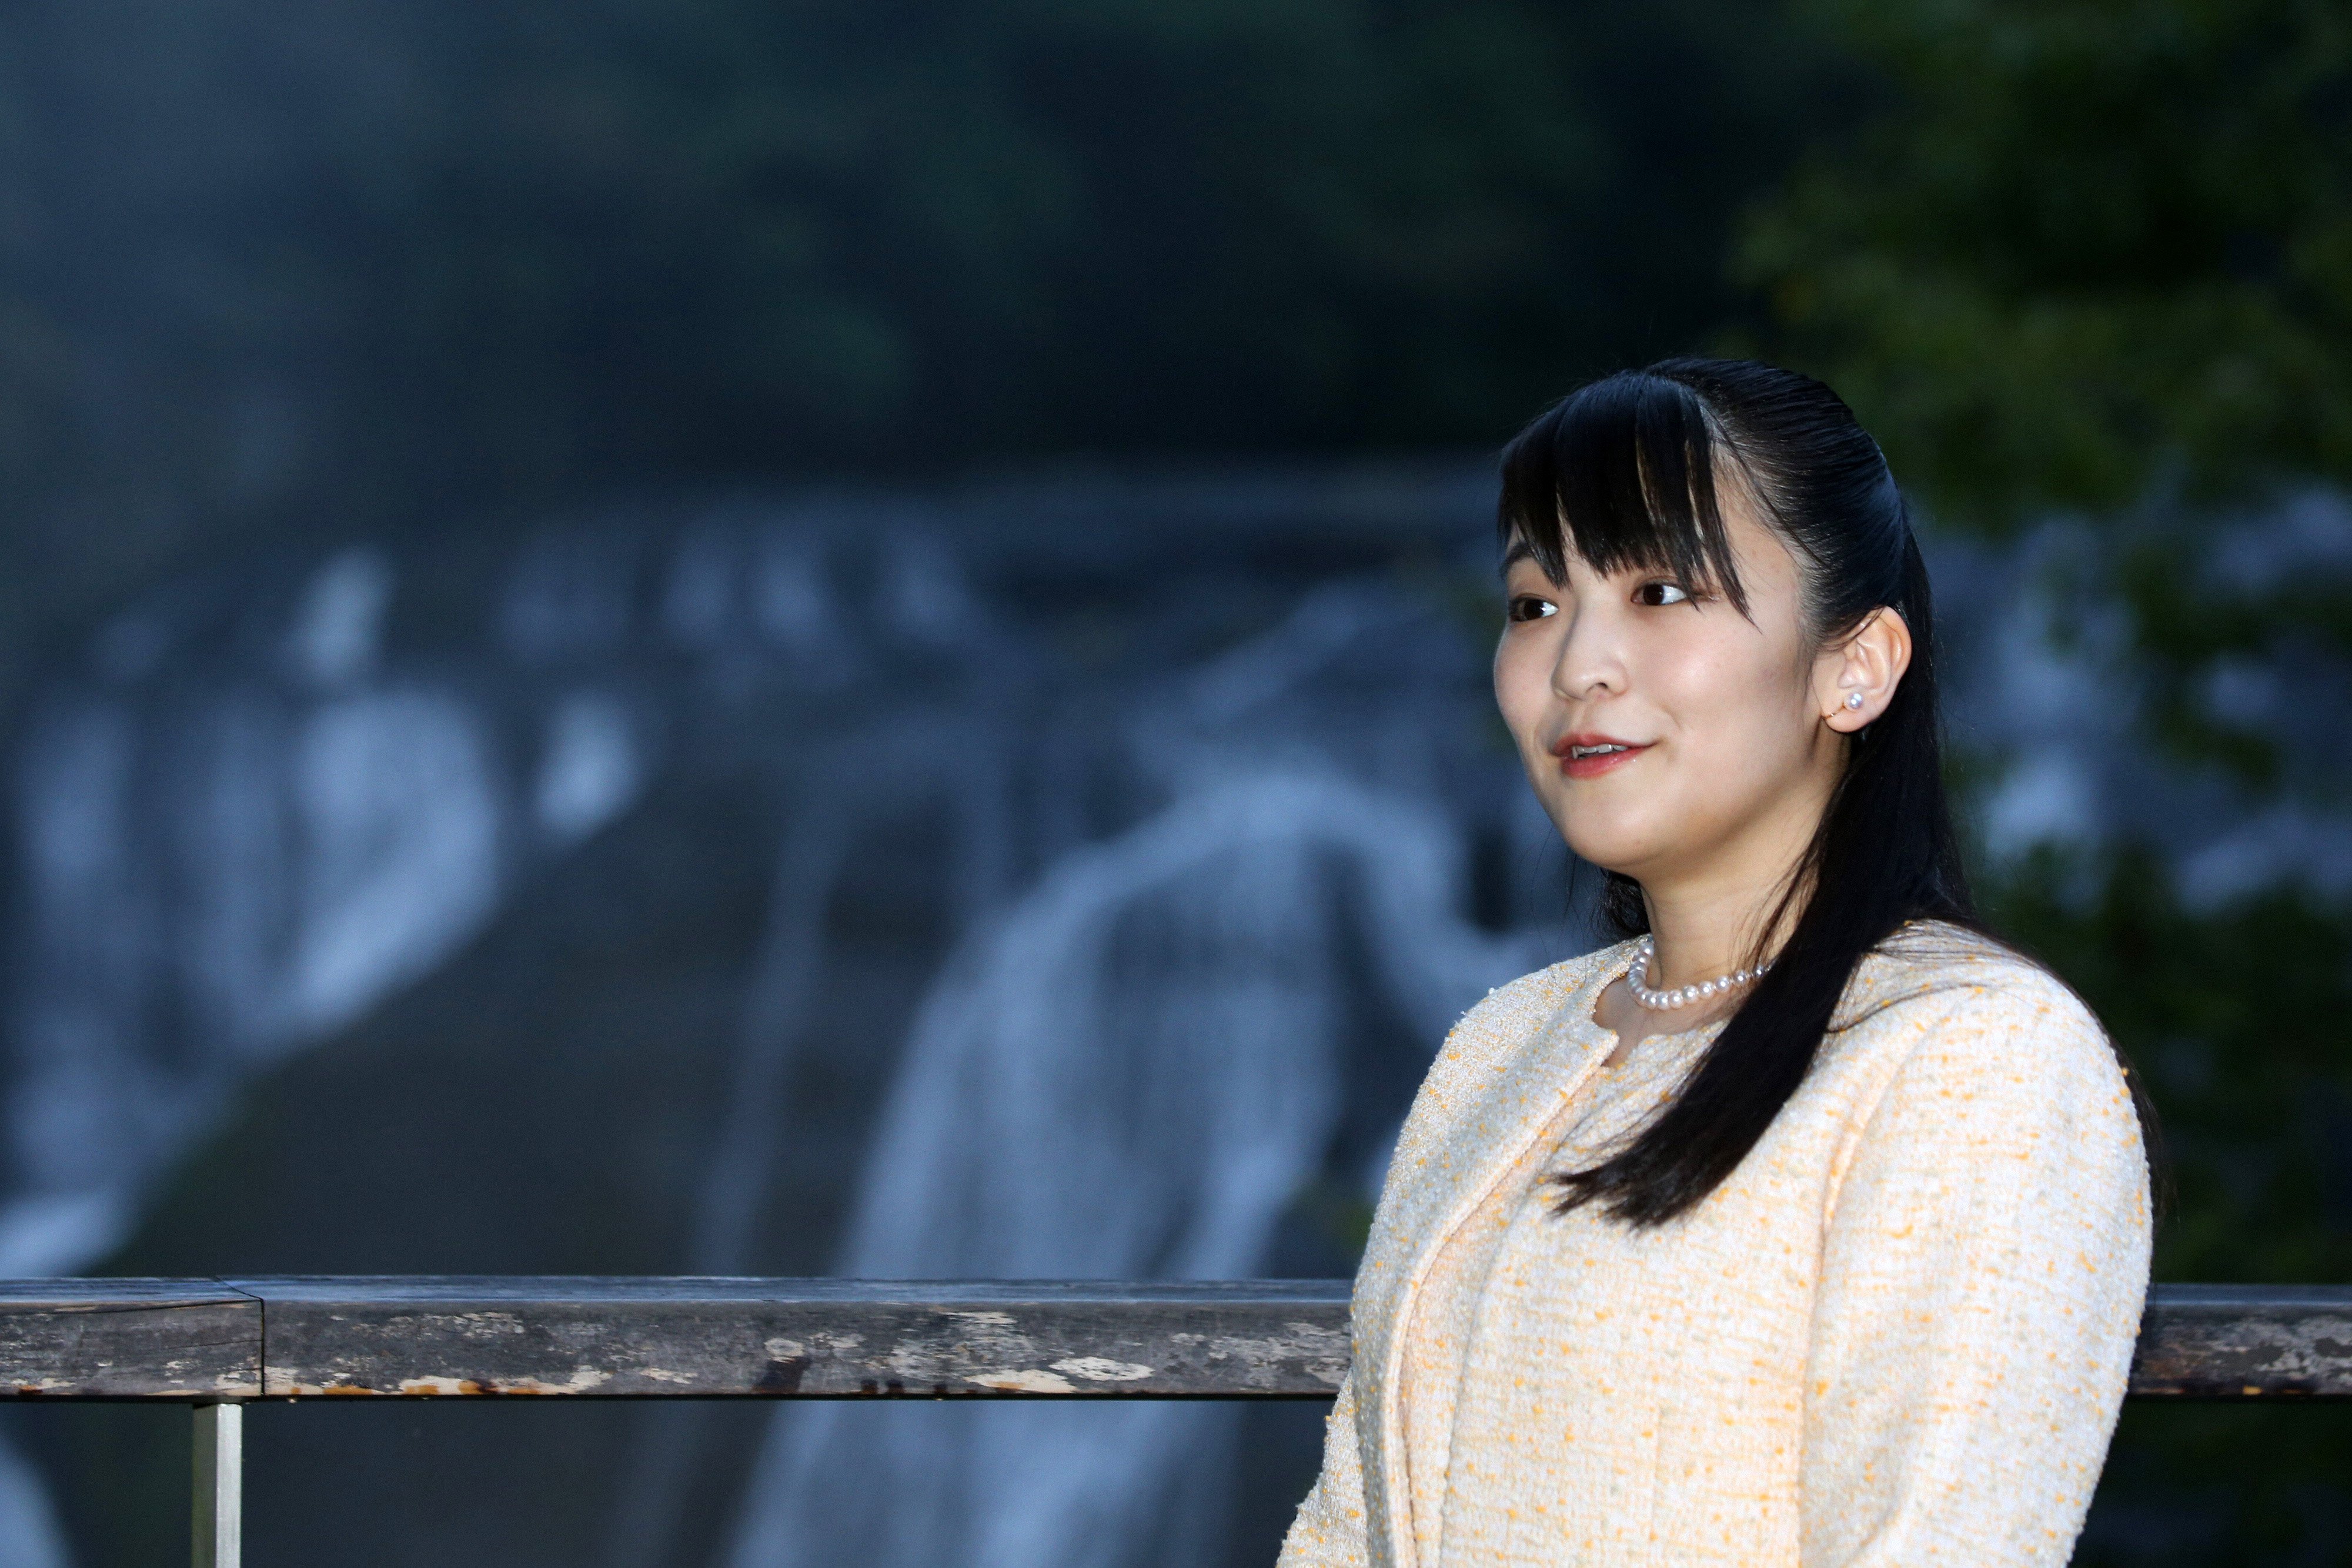 Princess Mako of Akishino visits the Fukuroda Falls on October 7, 2019 in Daigo, Ibaraki, Japan | Source: Getty Images